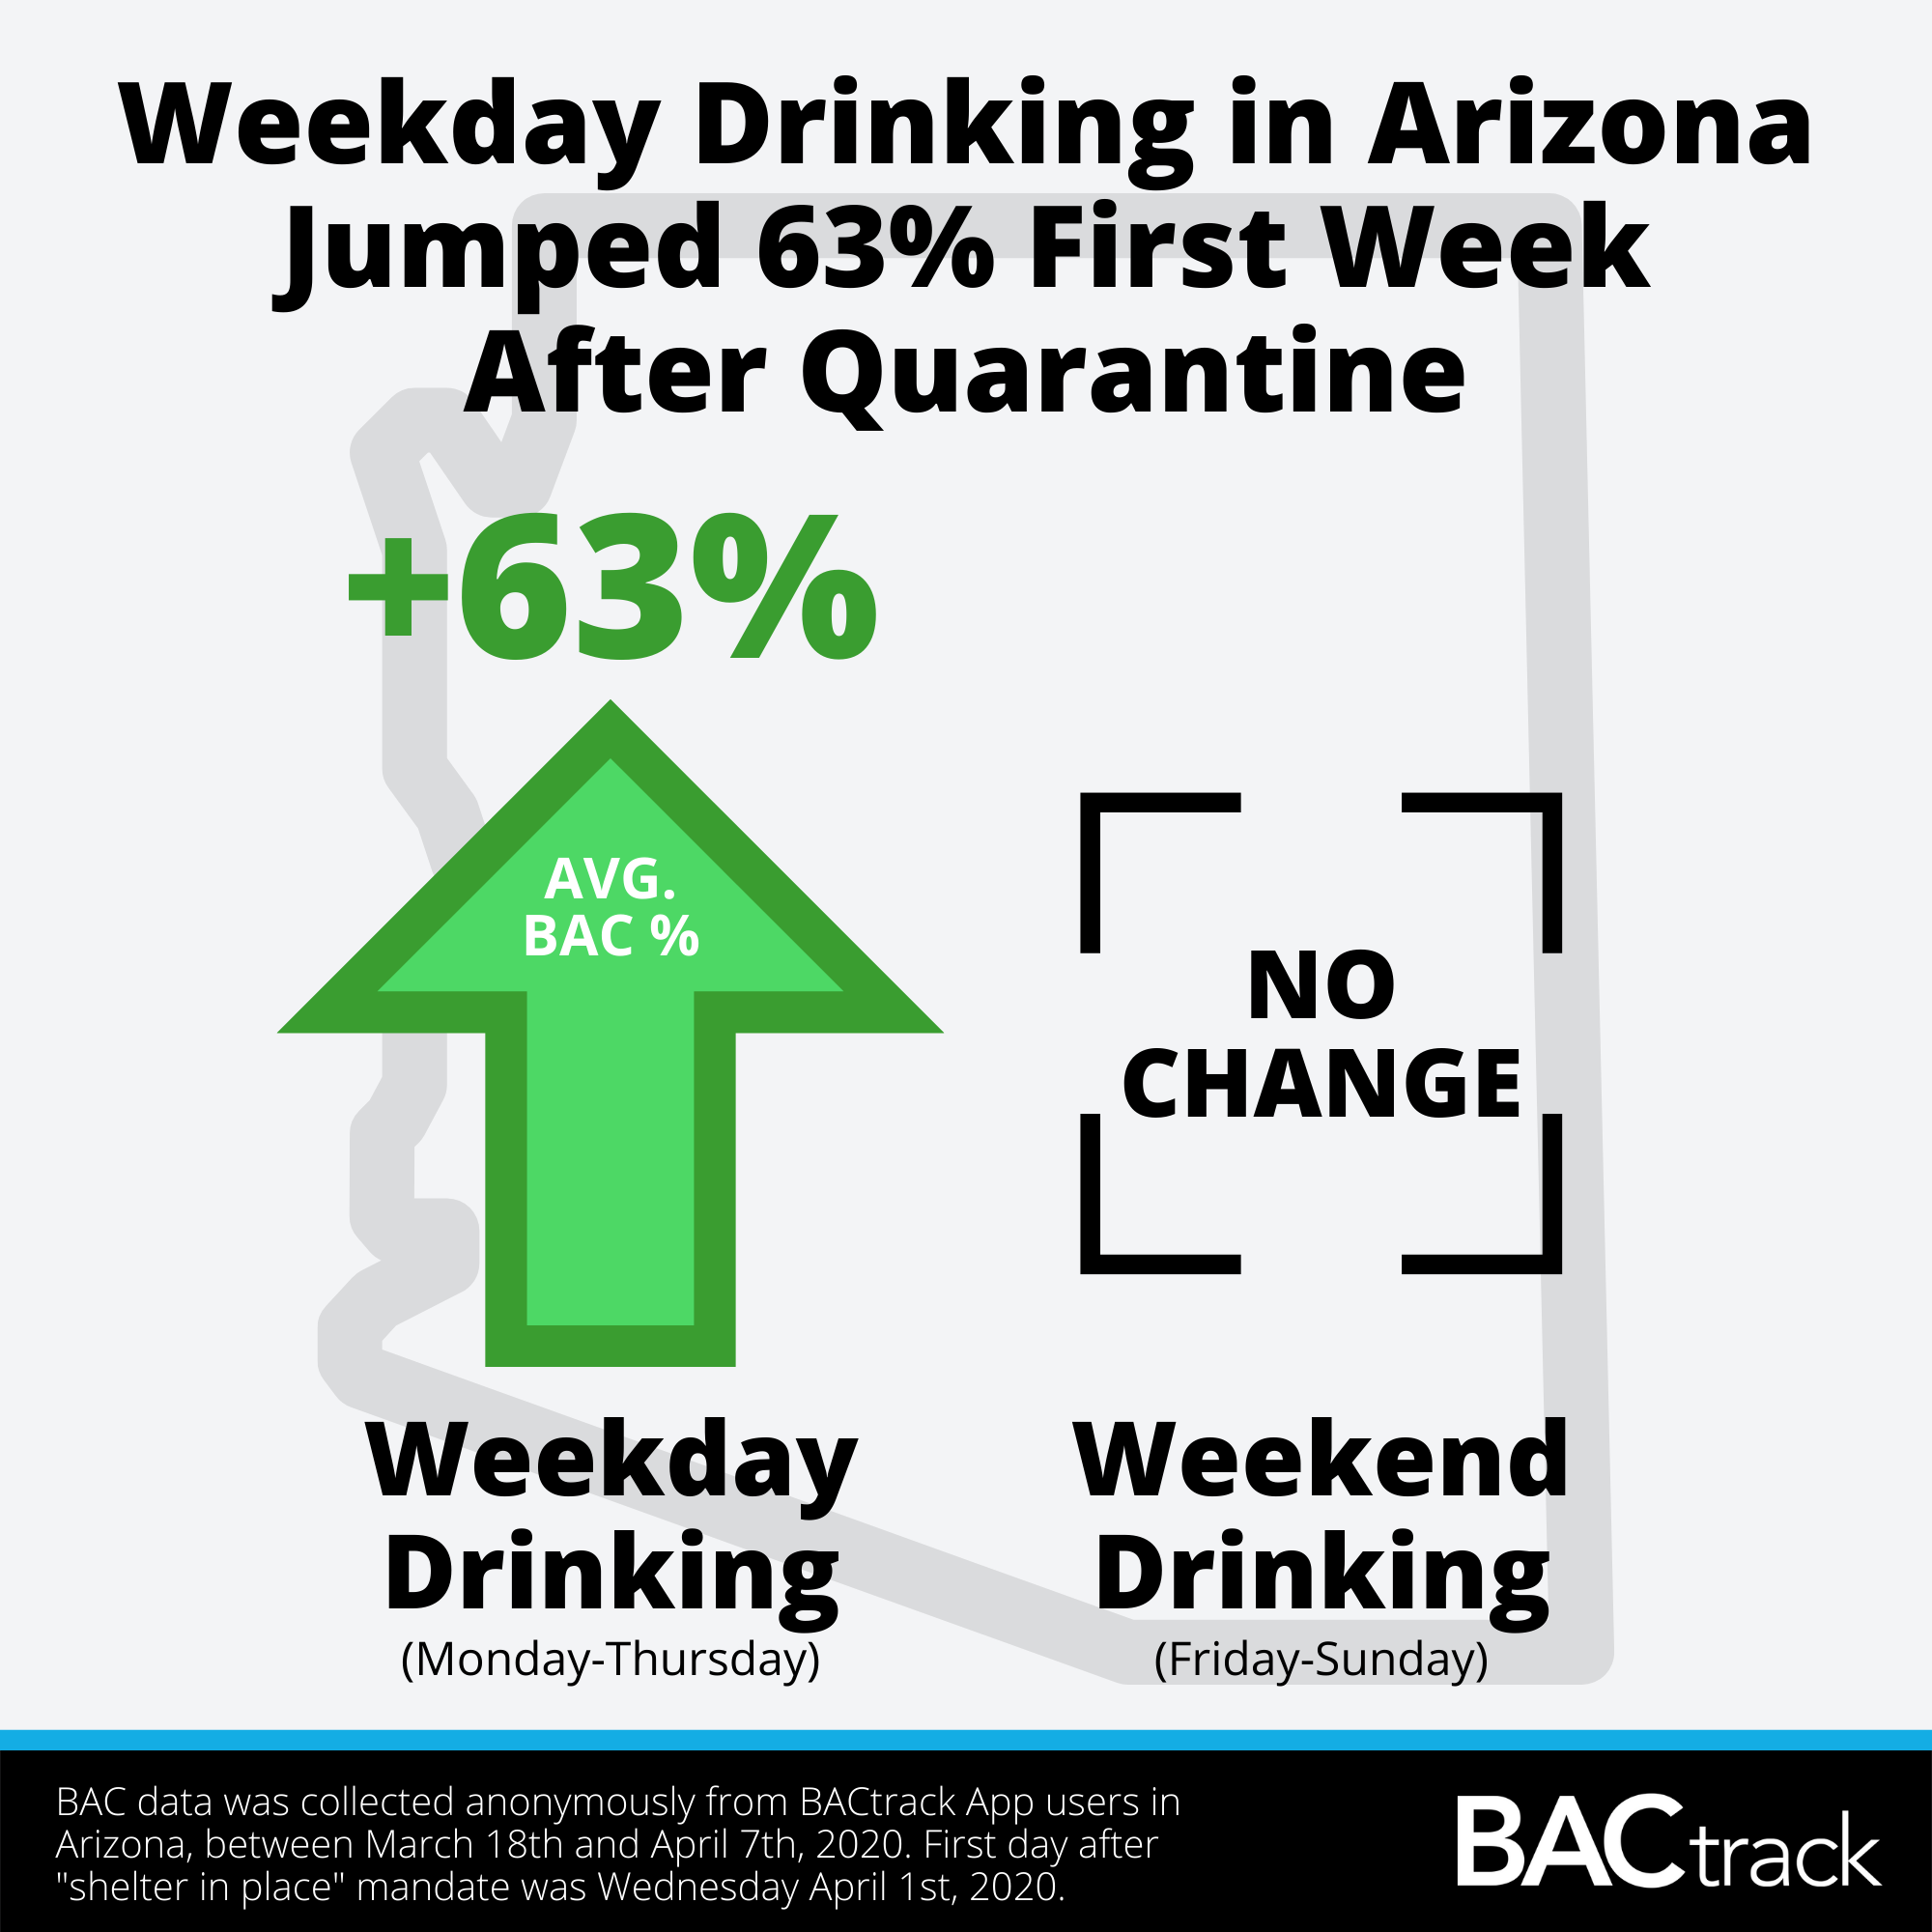 In Arizona, weekday drinking is up 63%.